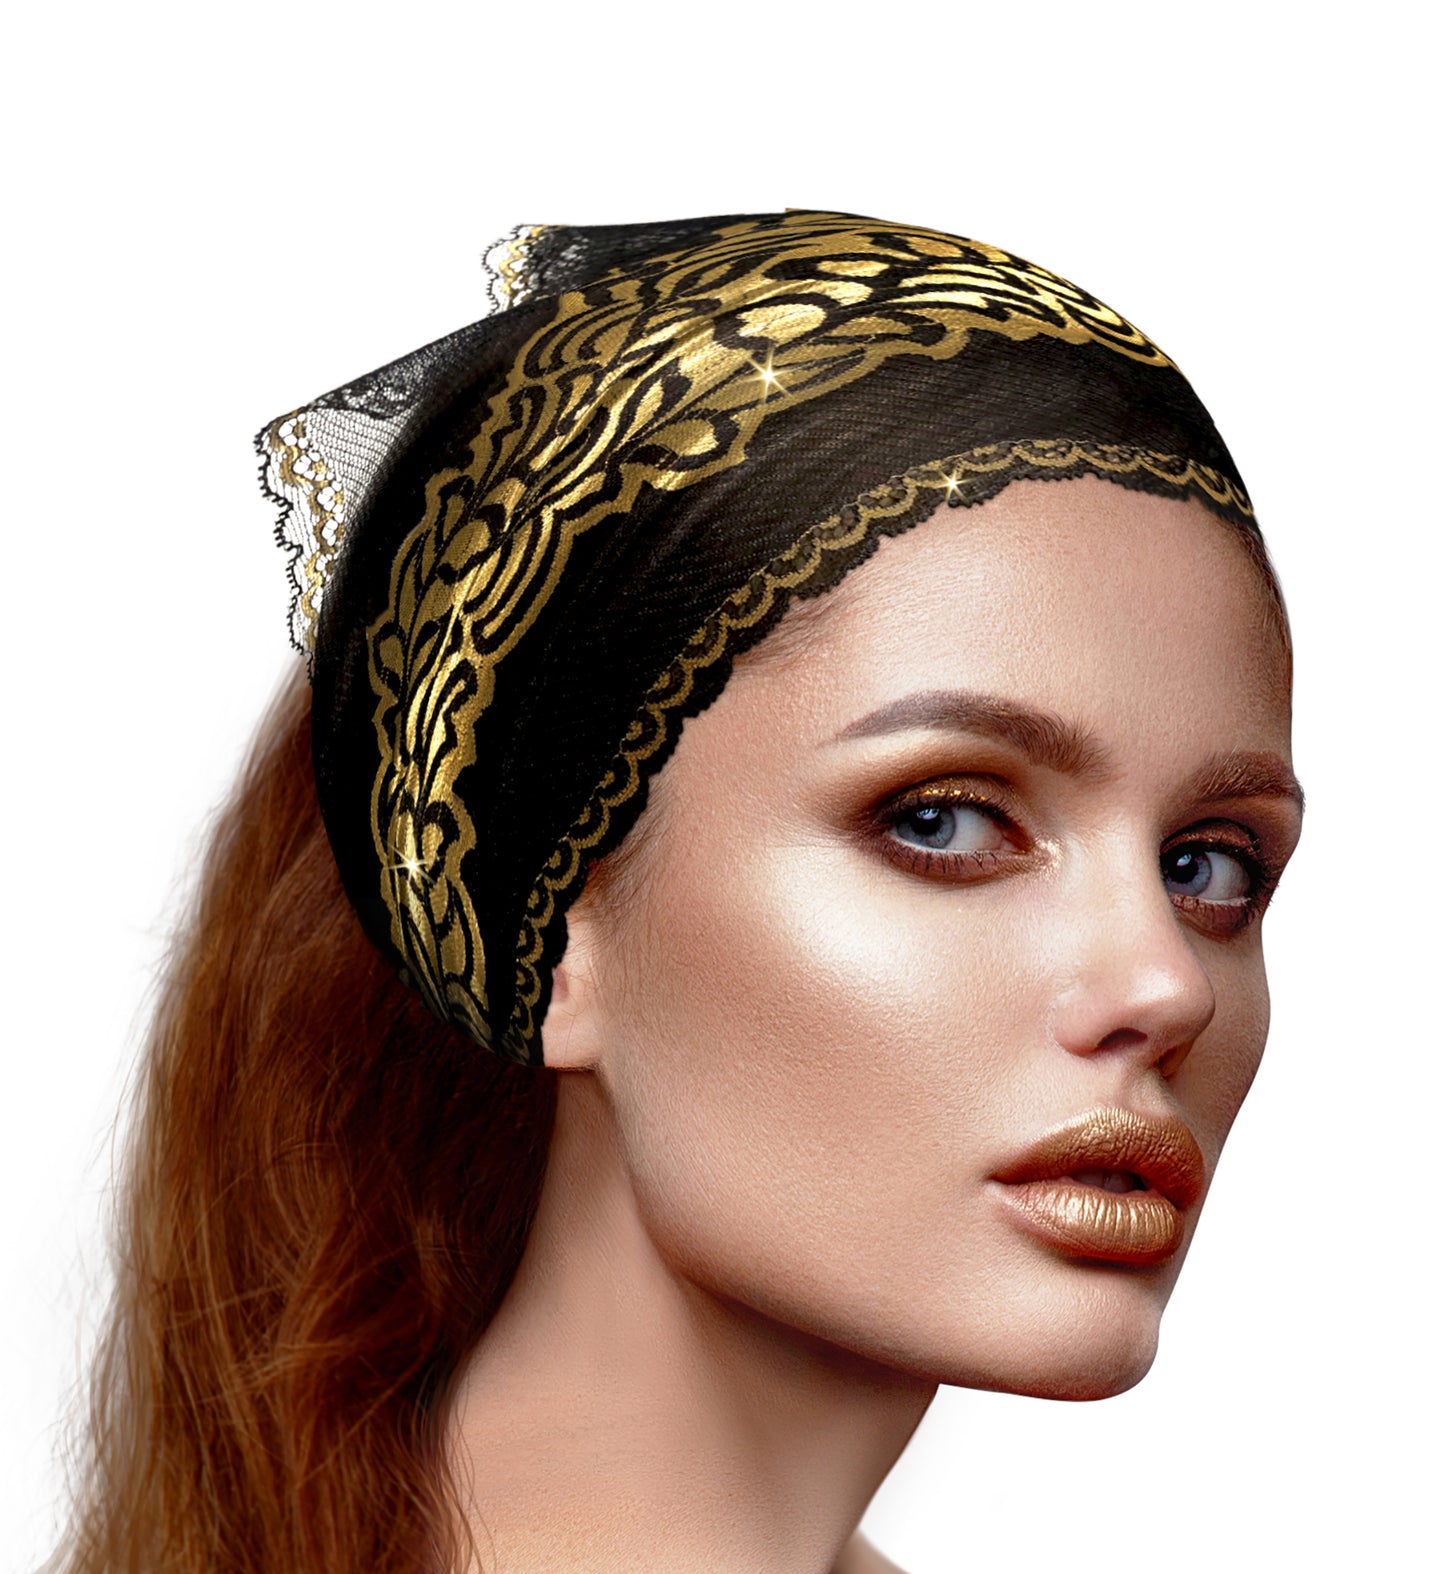 Black lace headband turban headwear